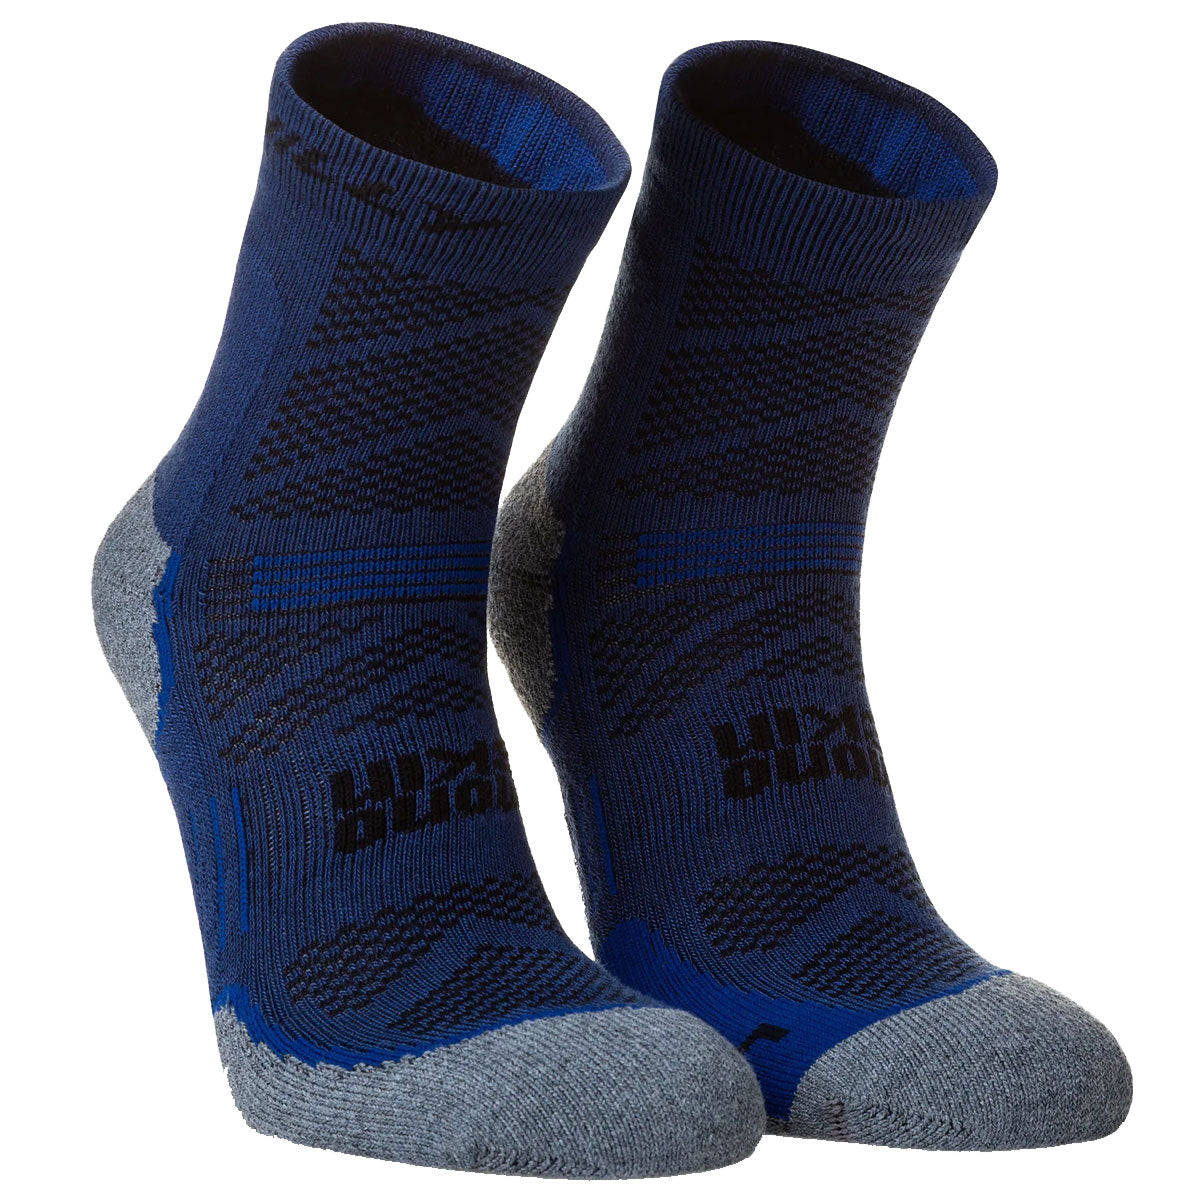 Hilly Supreme Anklet Max Socks - Mens - Midnight/Royal Blue